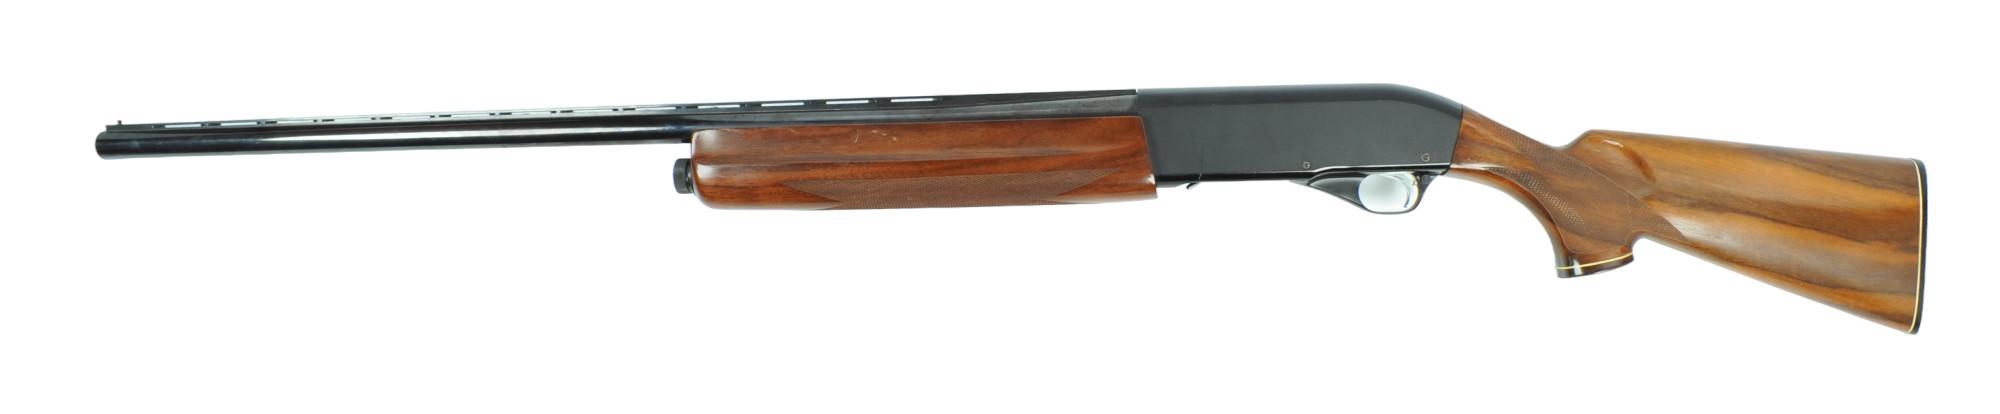 Savage Fox Model FA-1 12 Gauge Semi-auto Shotgun FFL Required: SA10995 (MGX1)